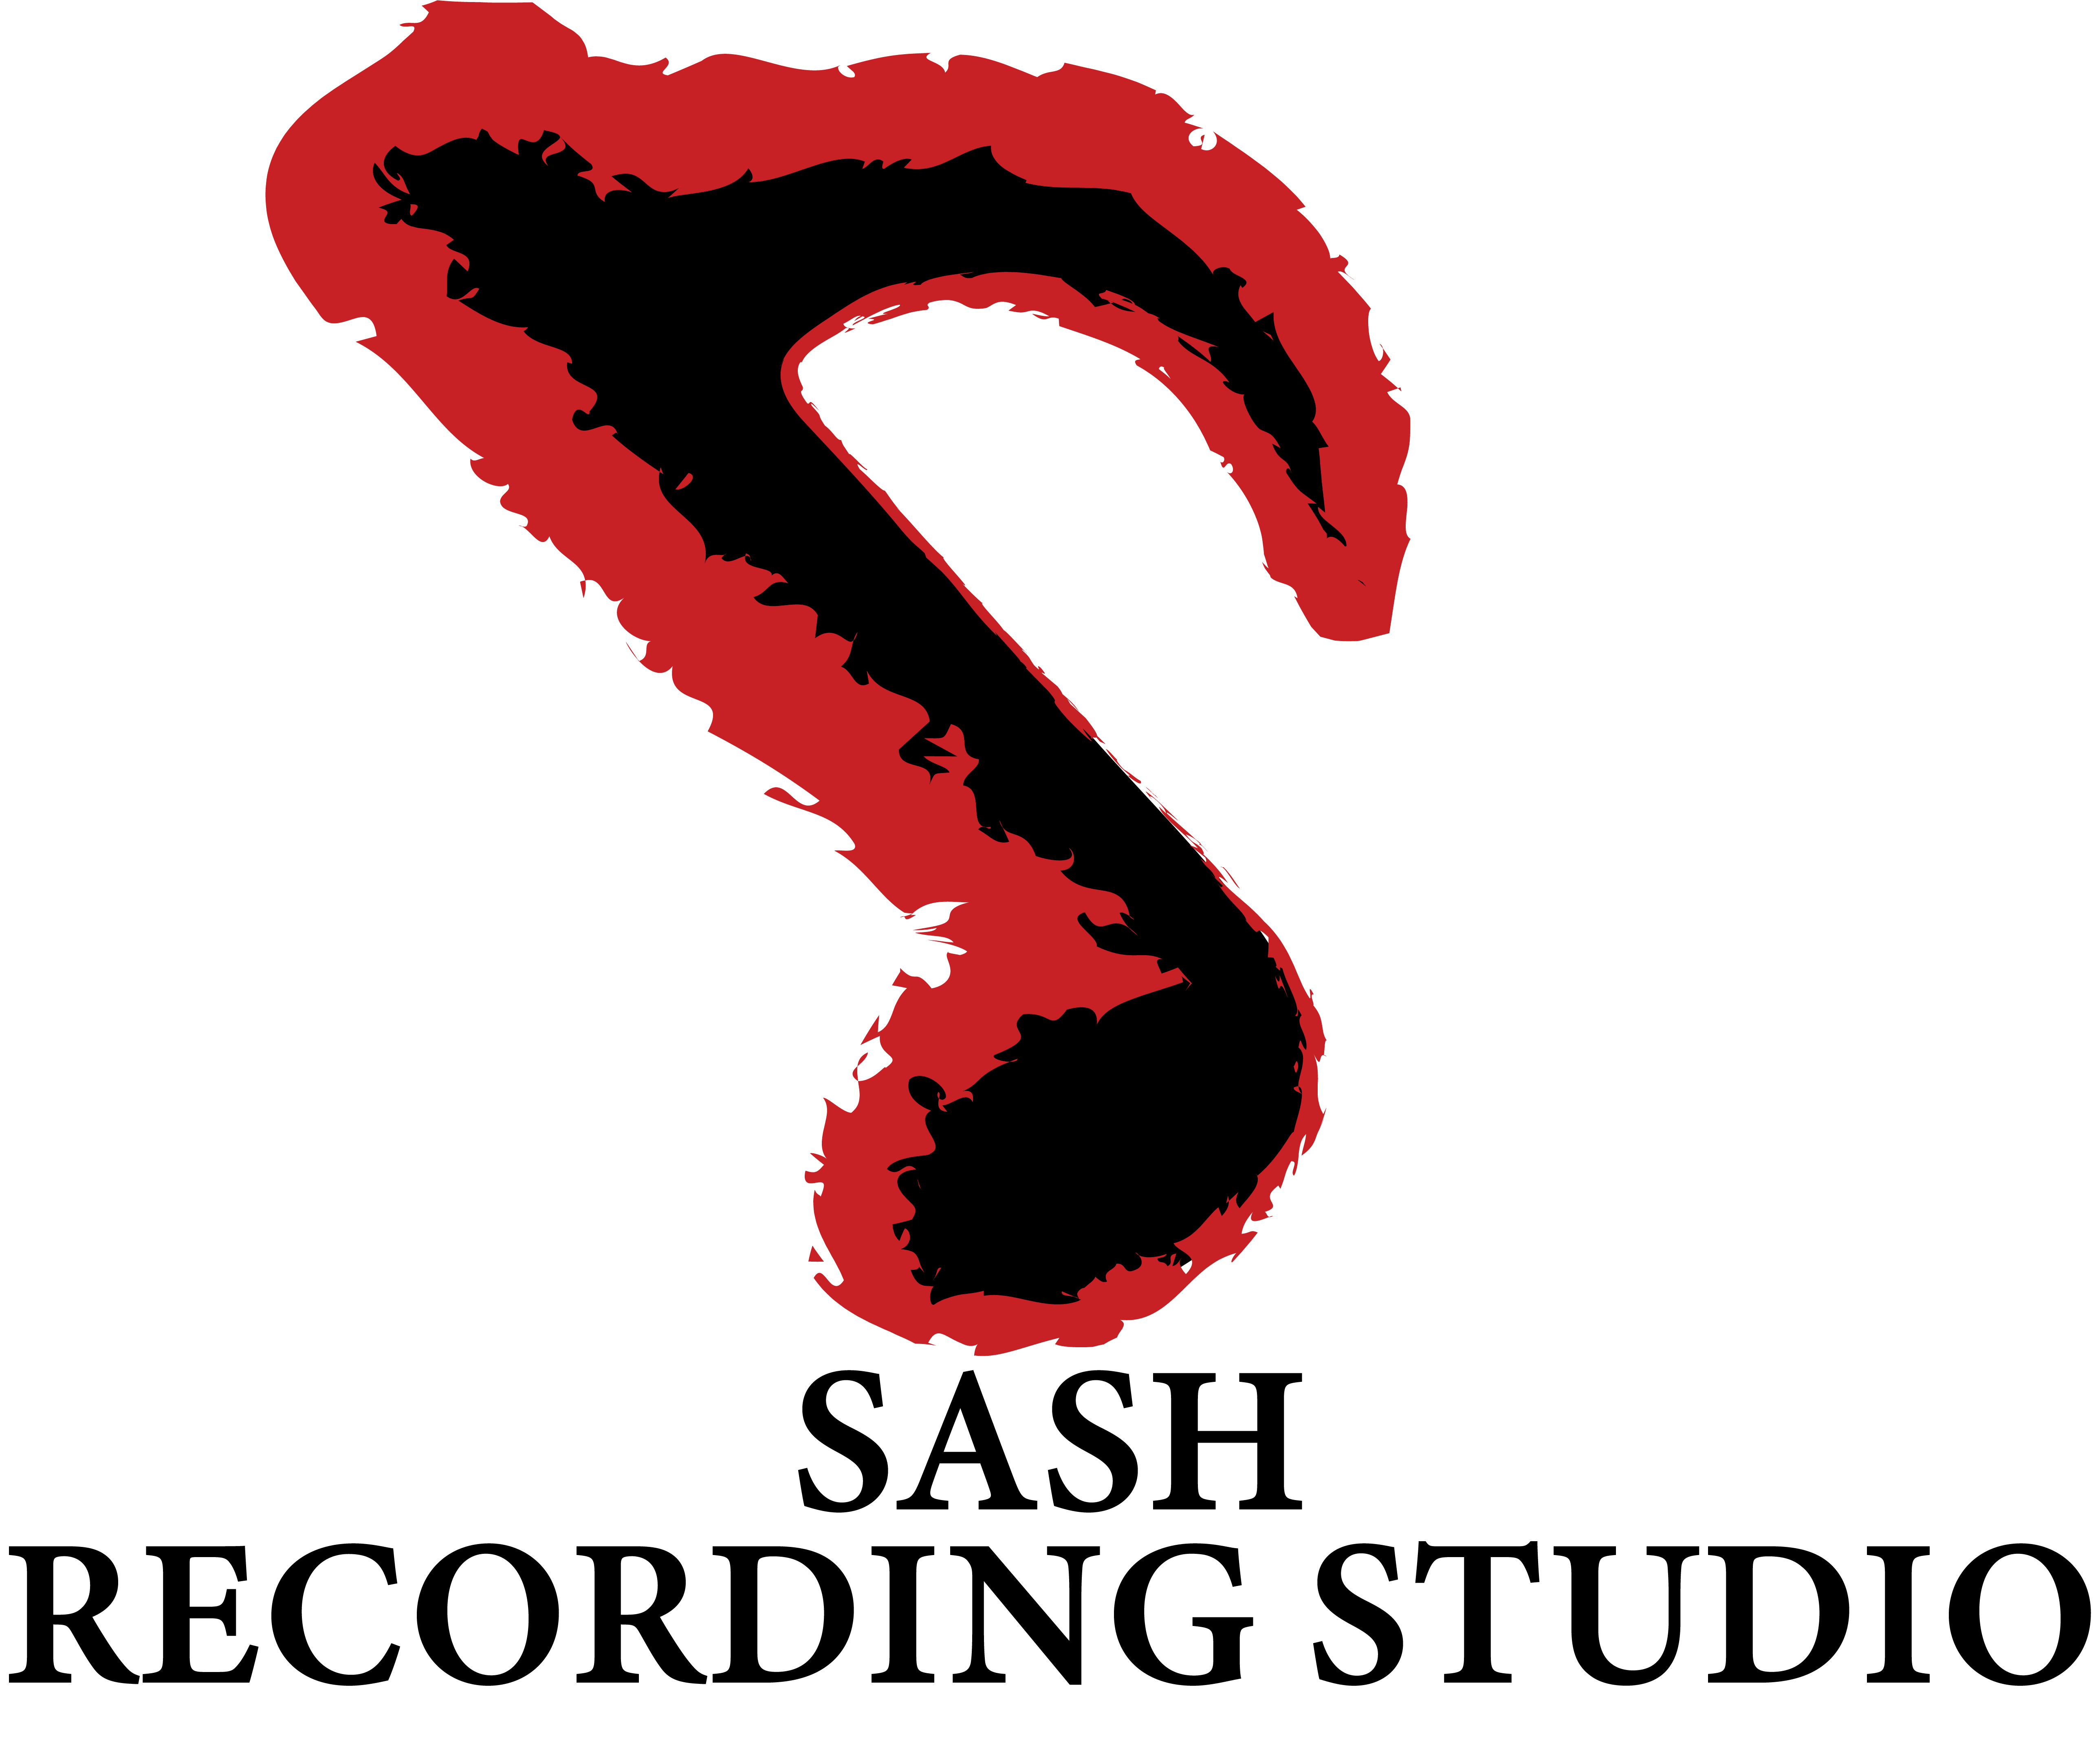 SASH RECORDING STUDIO